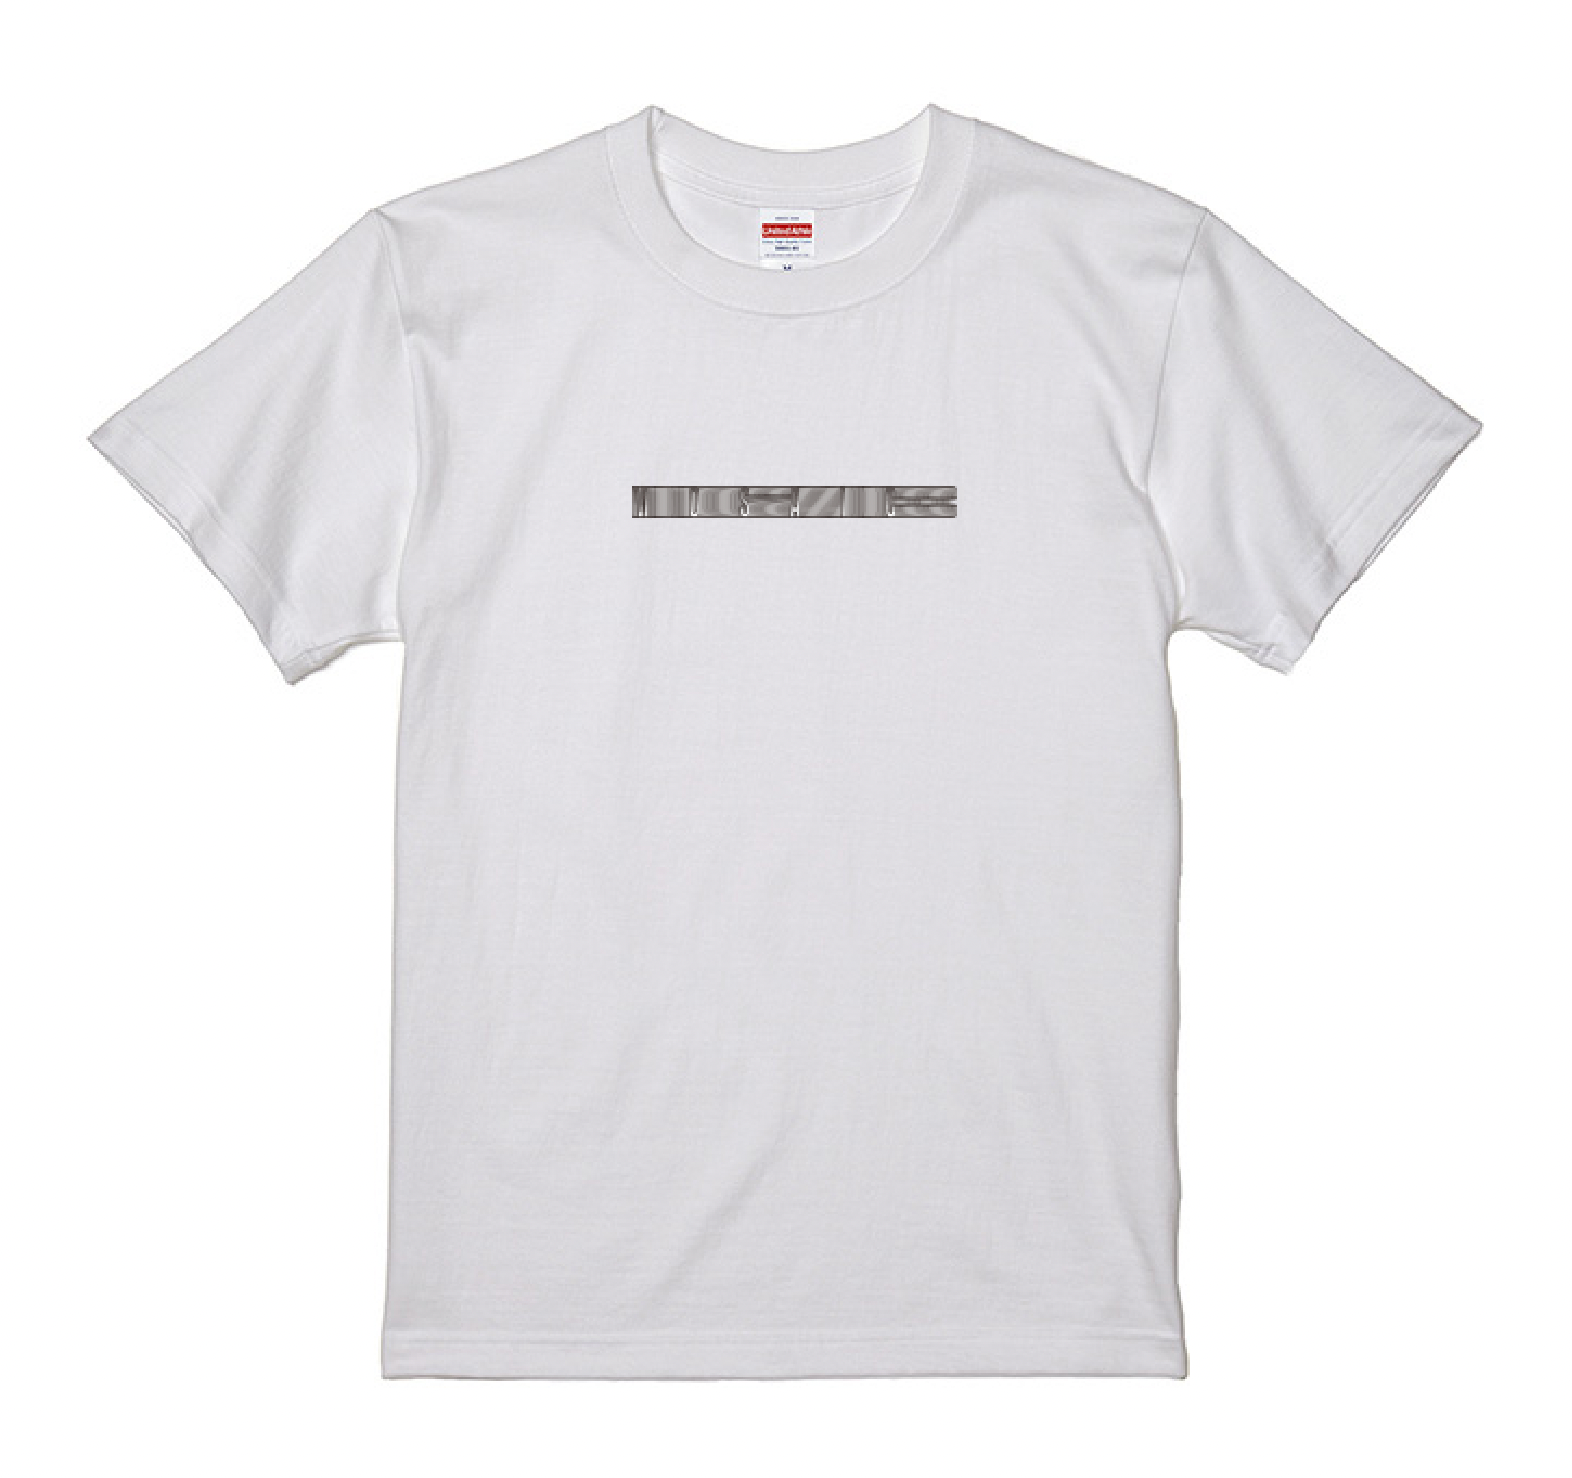 Mosaic × Qotaroo - Mosaic T Shirts White (XL) : wear(XL size)